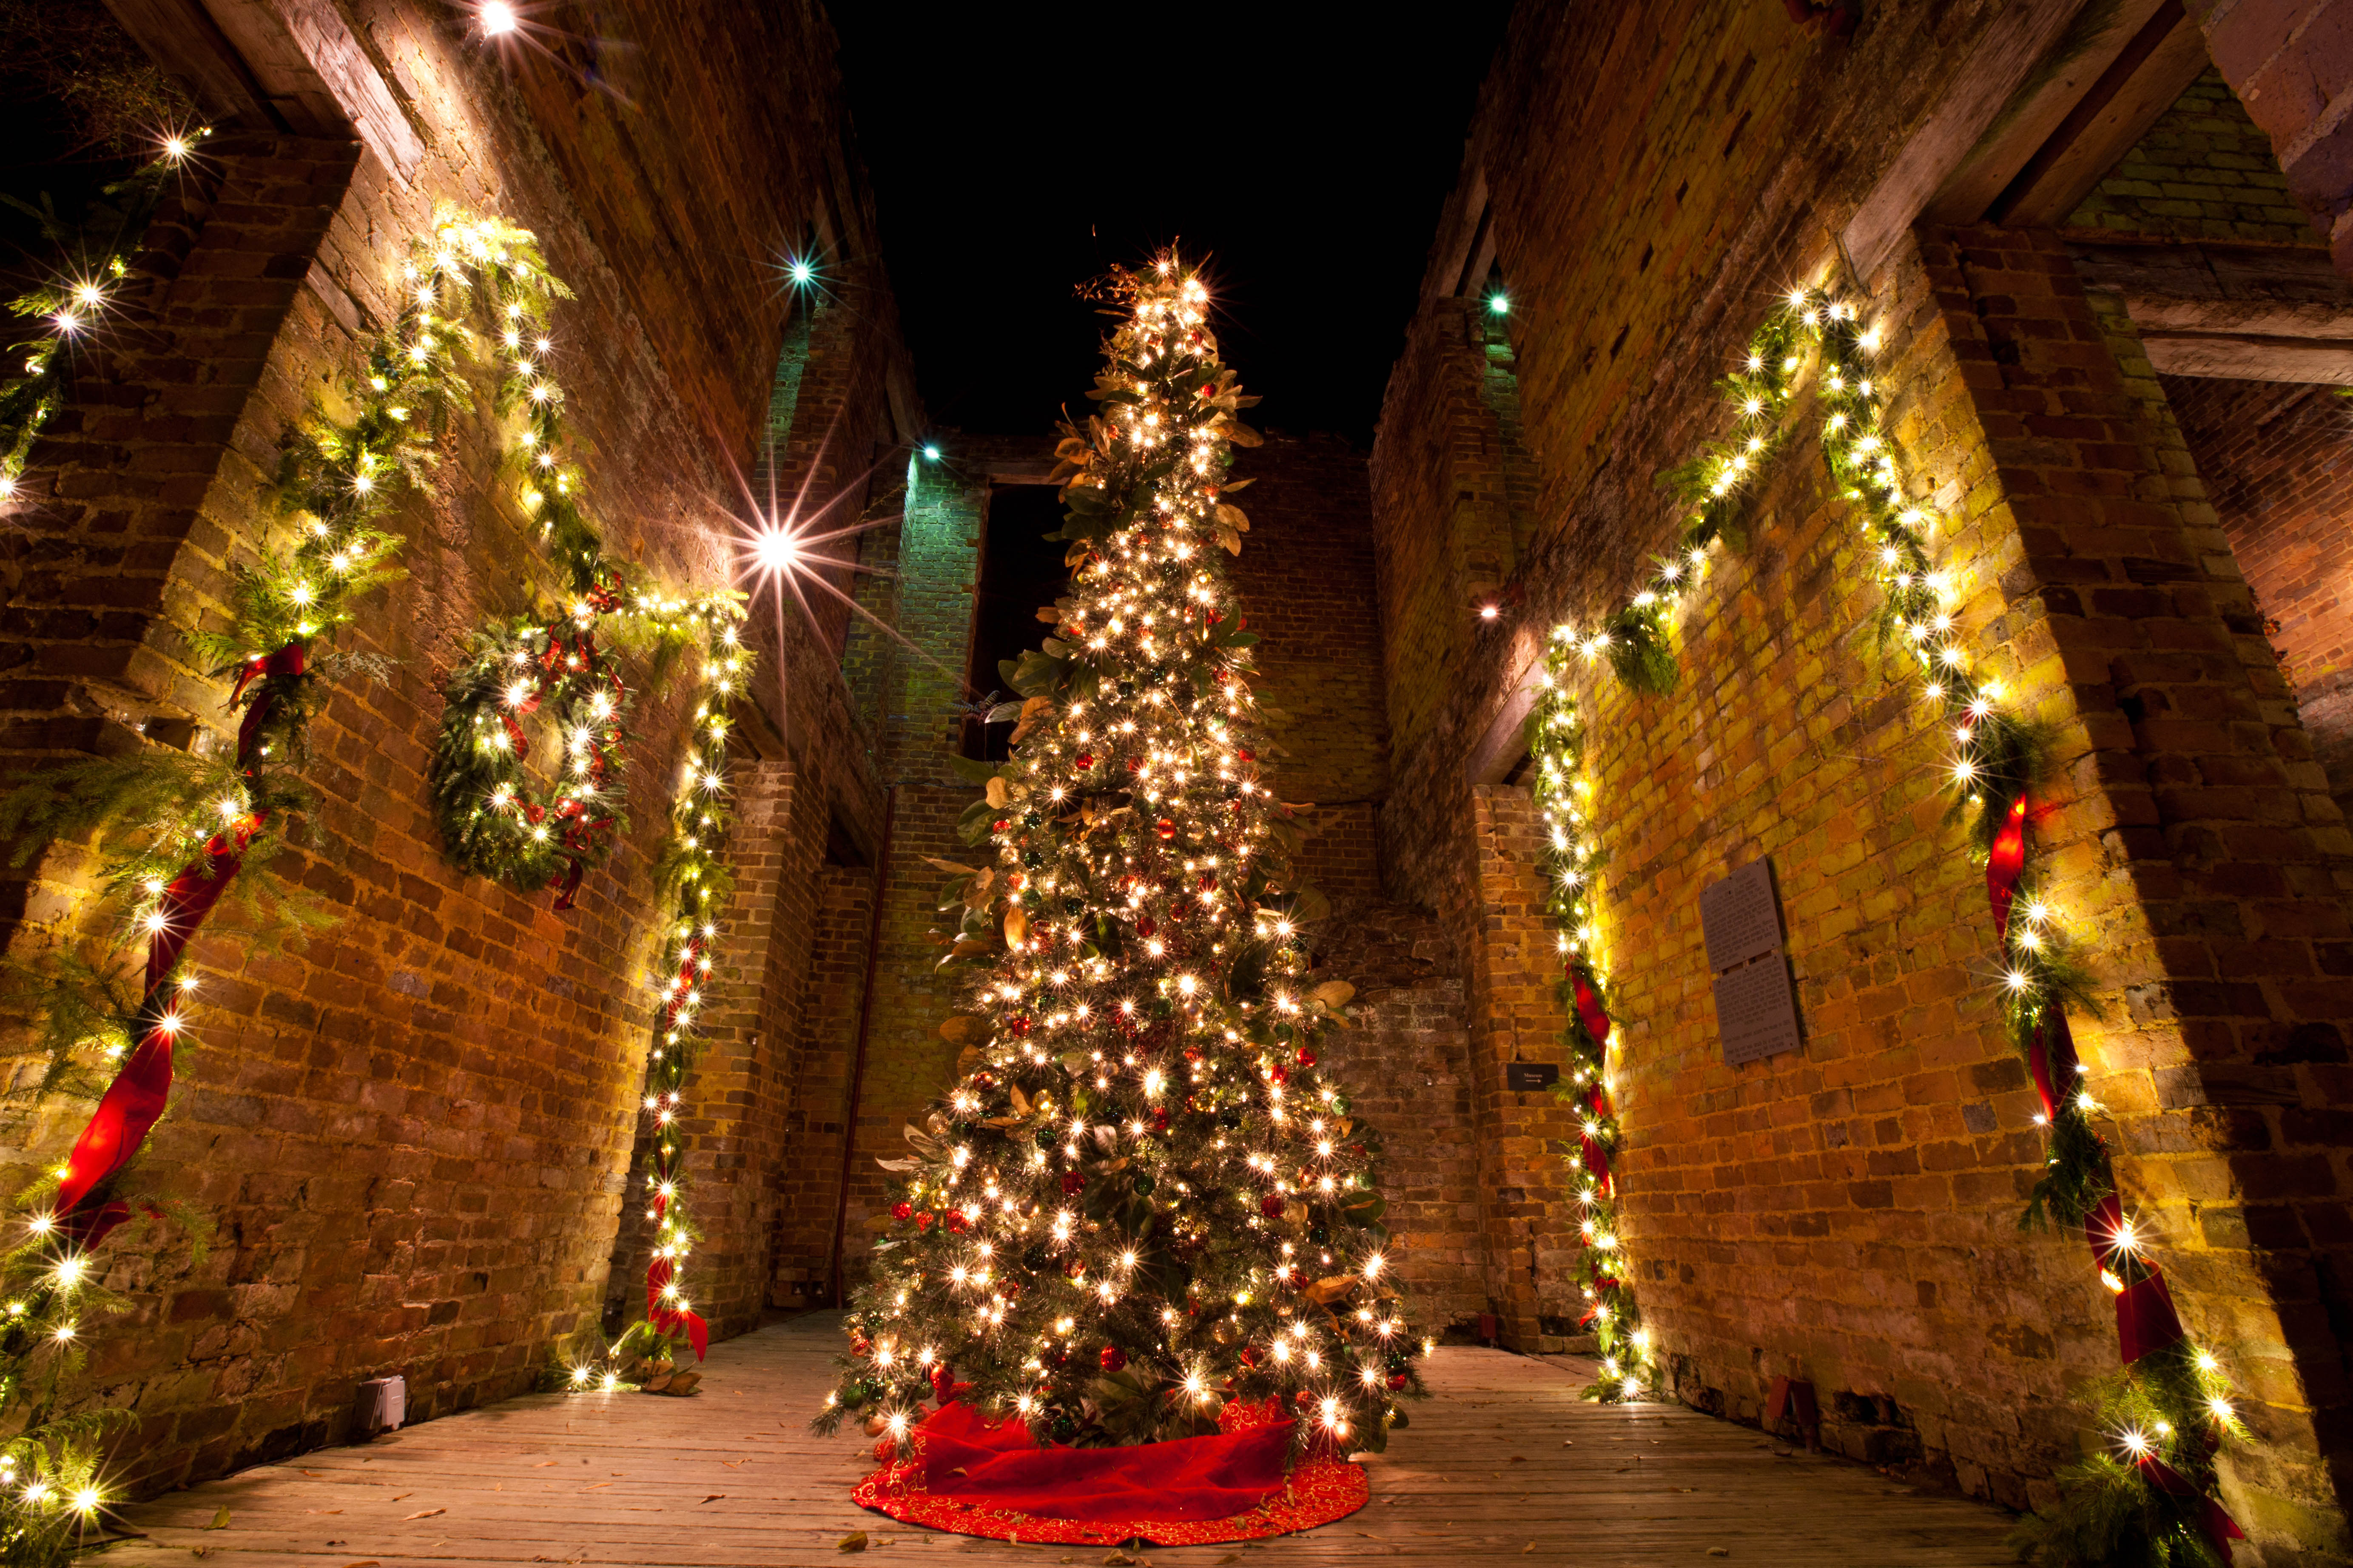 Colorful lights adorn the walls and Christmas tree inside The Ruins at Barnsley Resort.